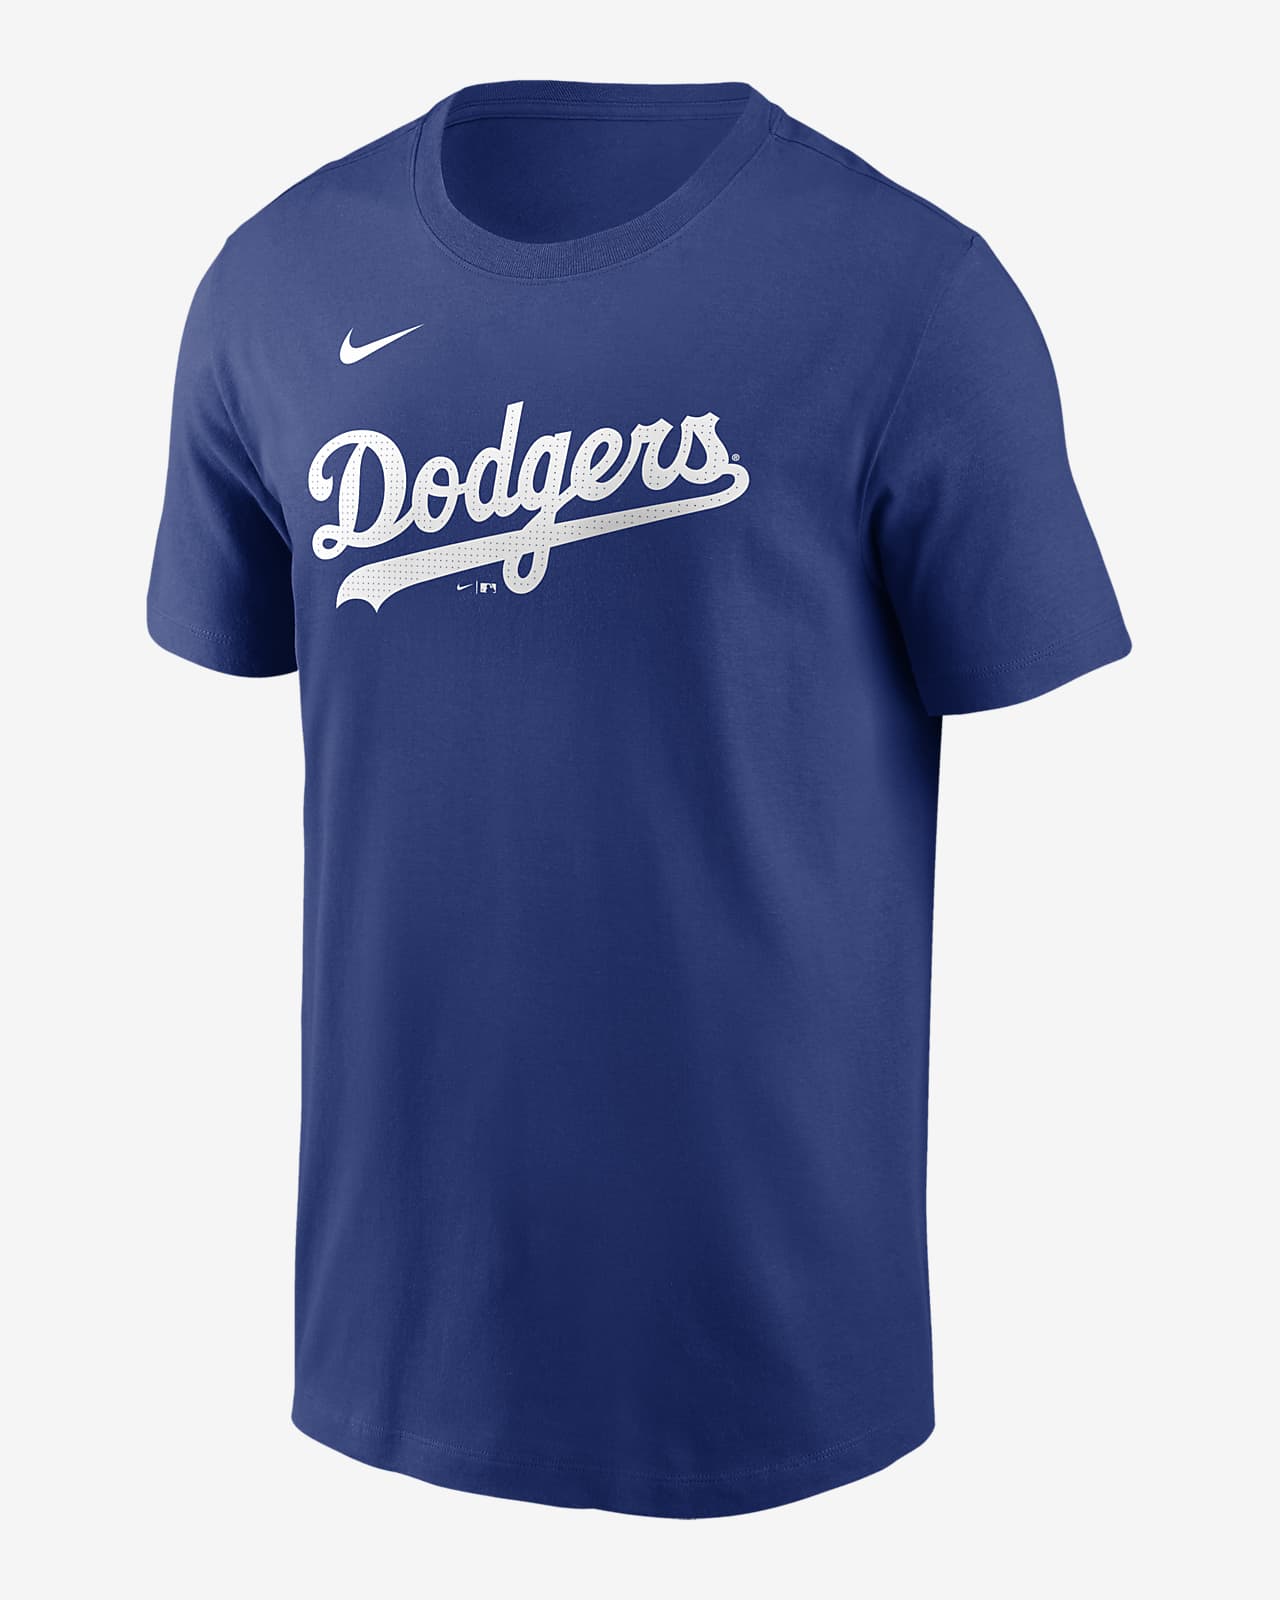 Mookie Betts Los Angeles Dodgers Fuse Men's Nike MLB T-Shirt